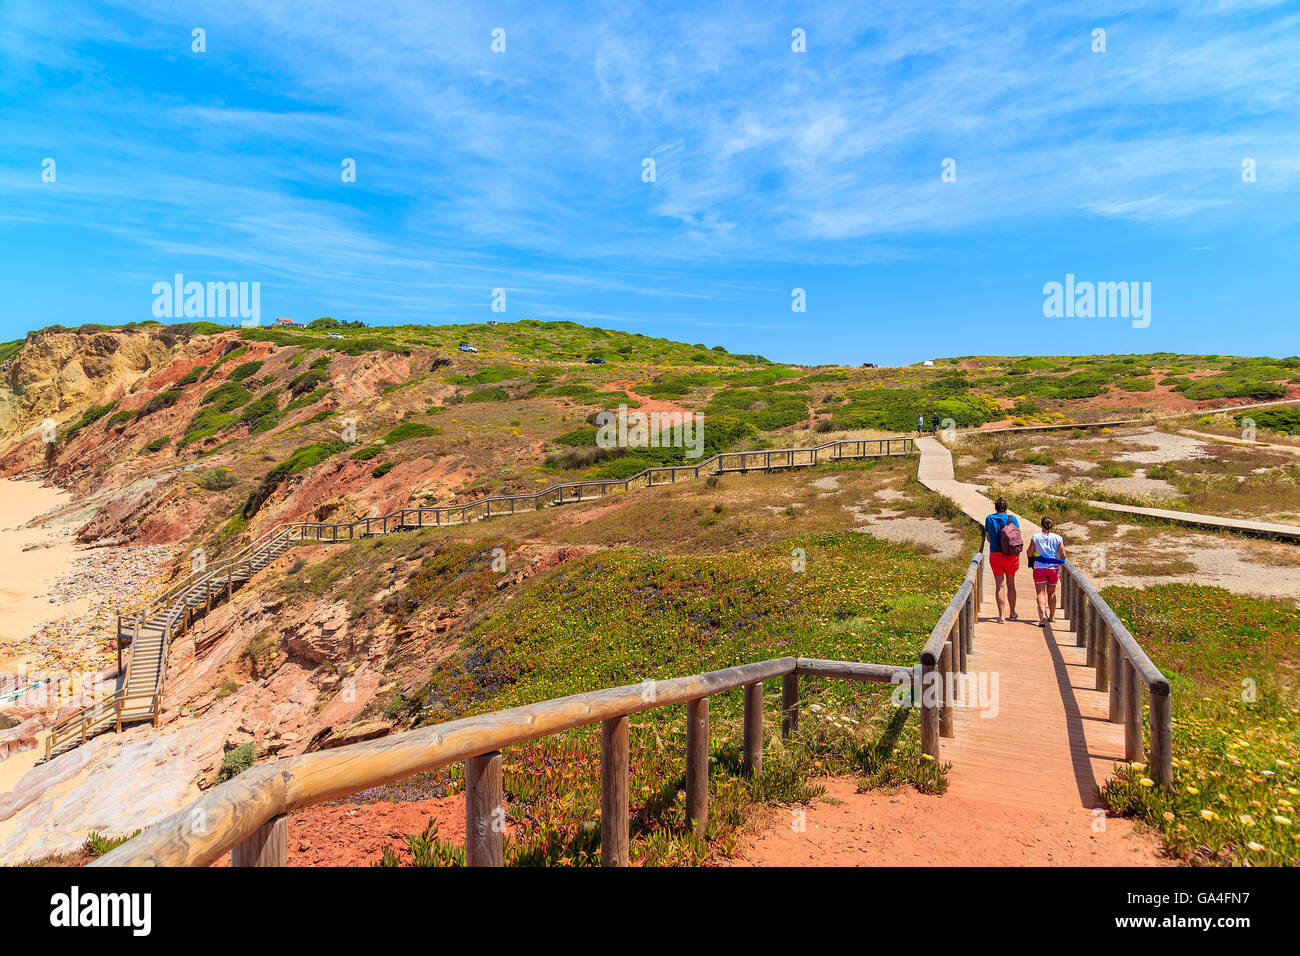 Couple of tourists walking on footbridge to Praia do Amado beach, famous place for surfing, Algarve region, Portugal Stock Photo